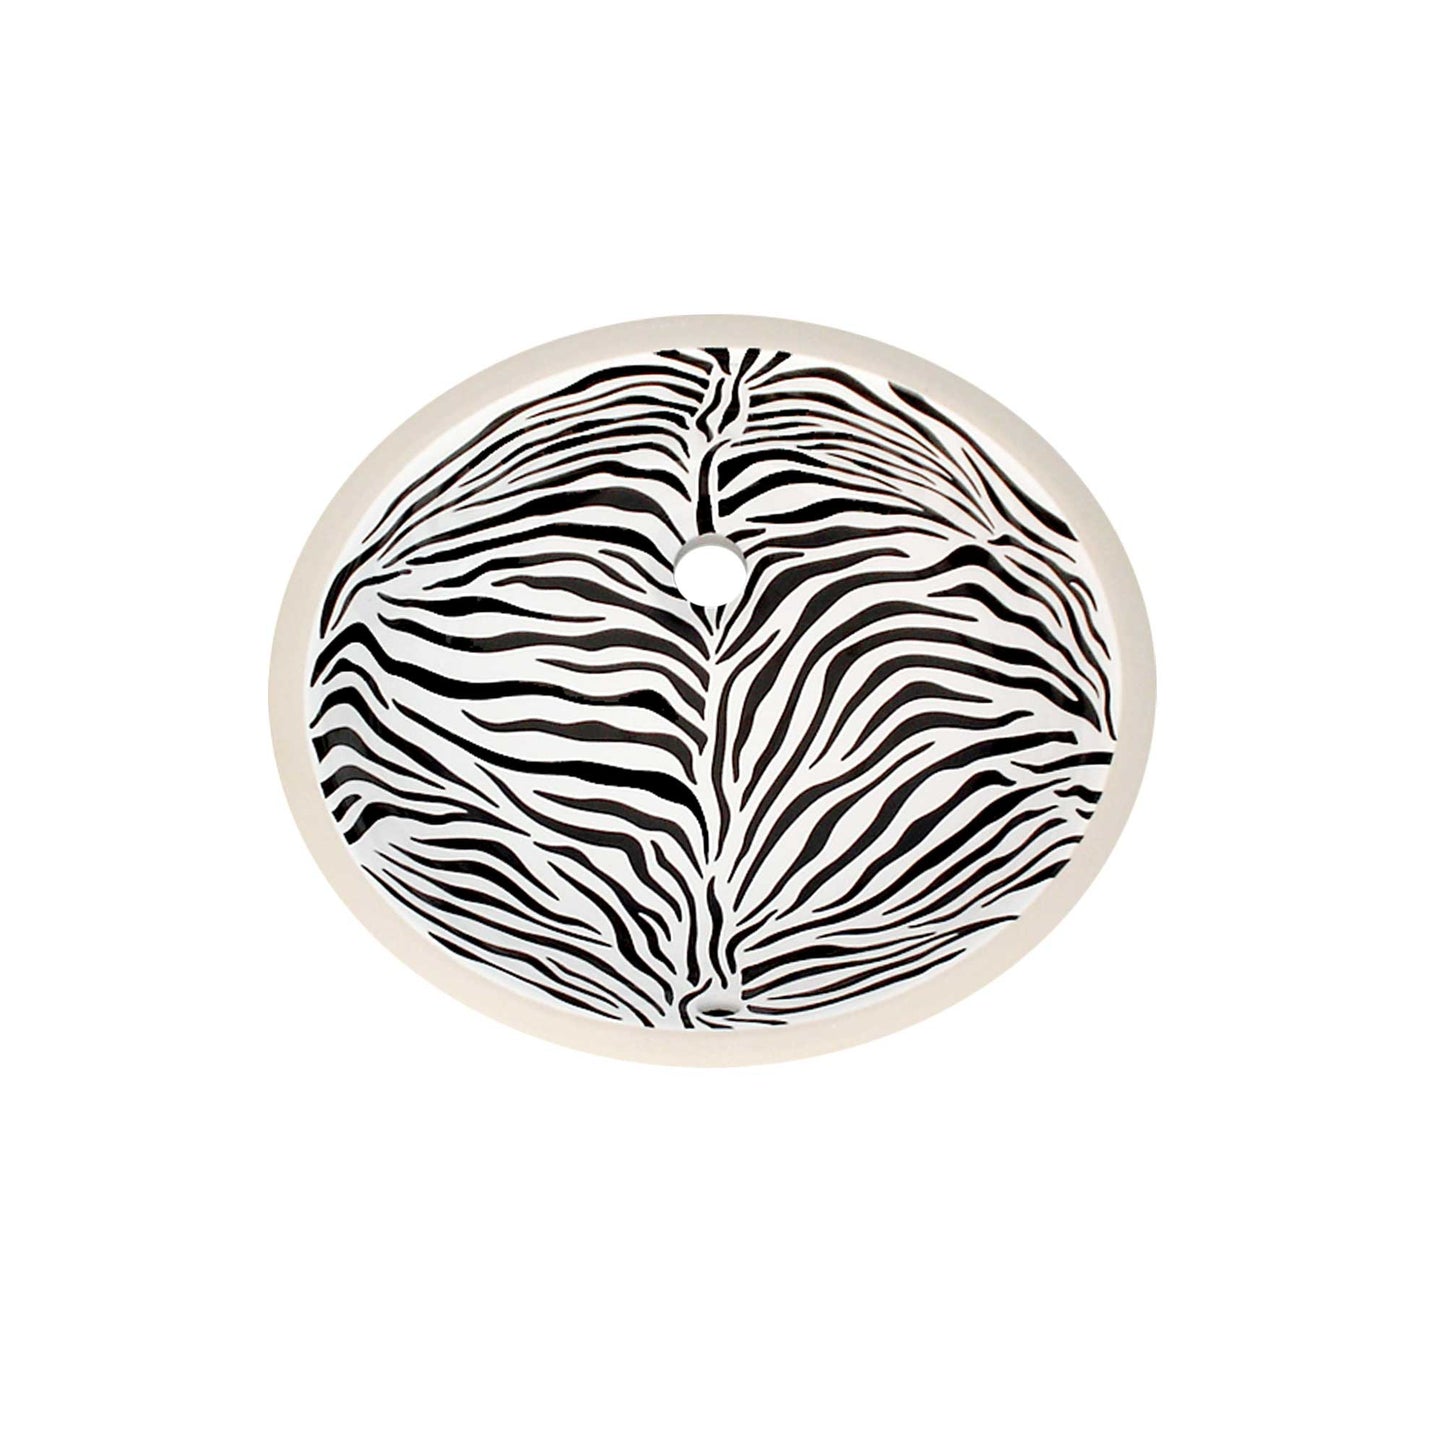 Zebra design painted on a white vanity bathroom sink